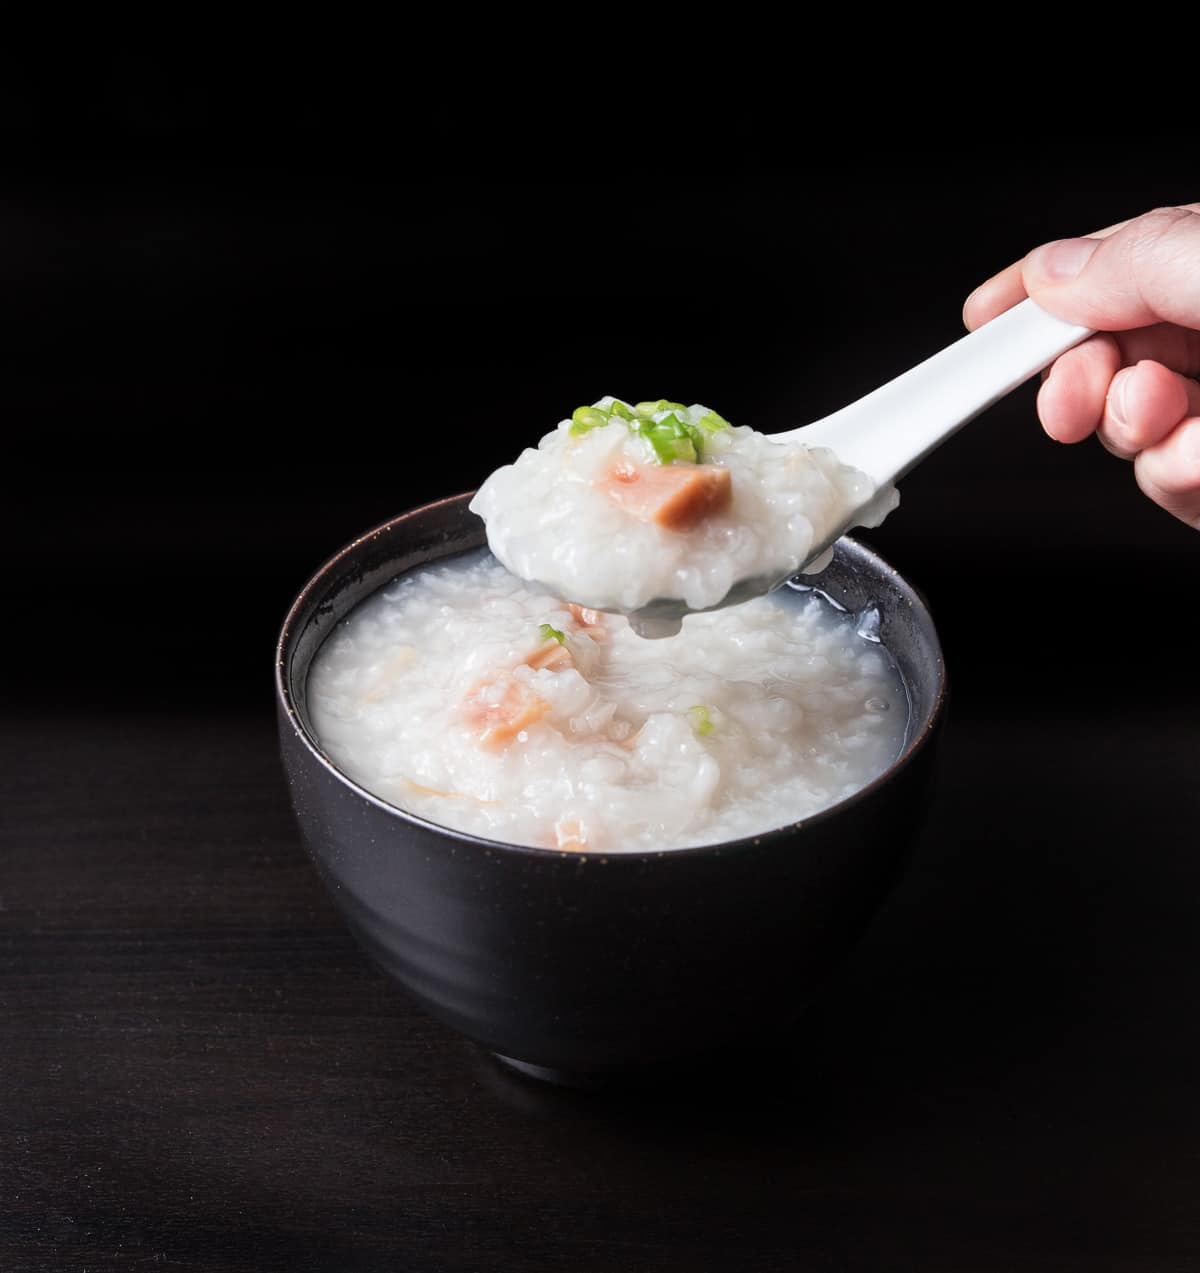 https://www.pressurecookrecipes.com/wp-content/uploads/2016/03/pressure-cooker-congee-rice-porridge-jook-feature.jpg